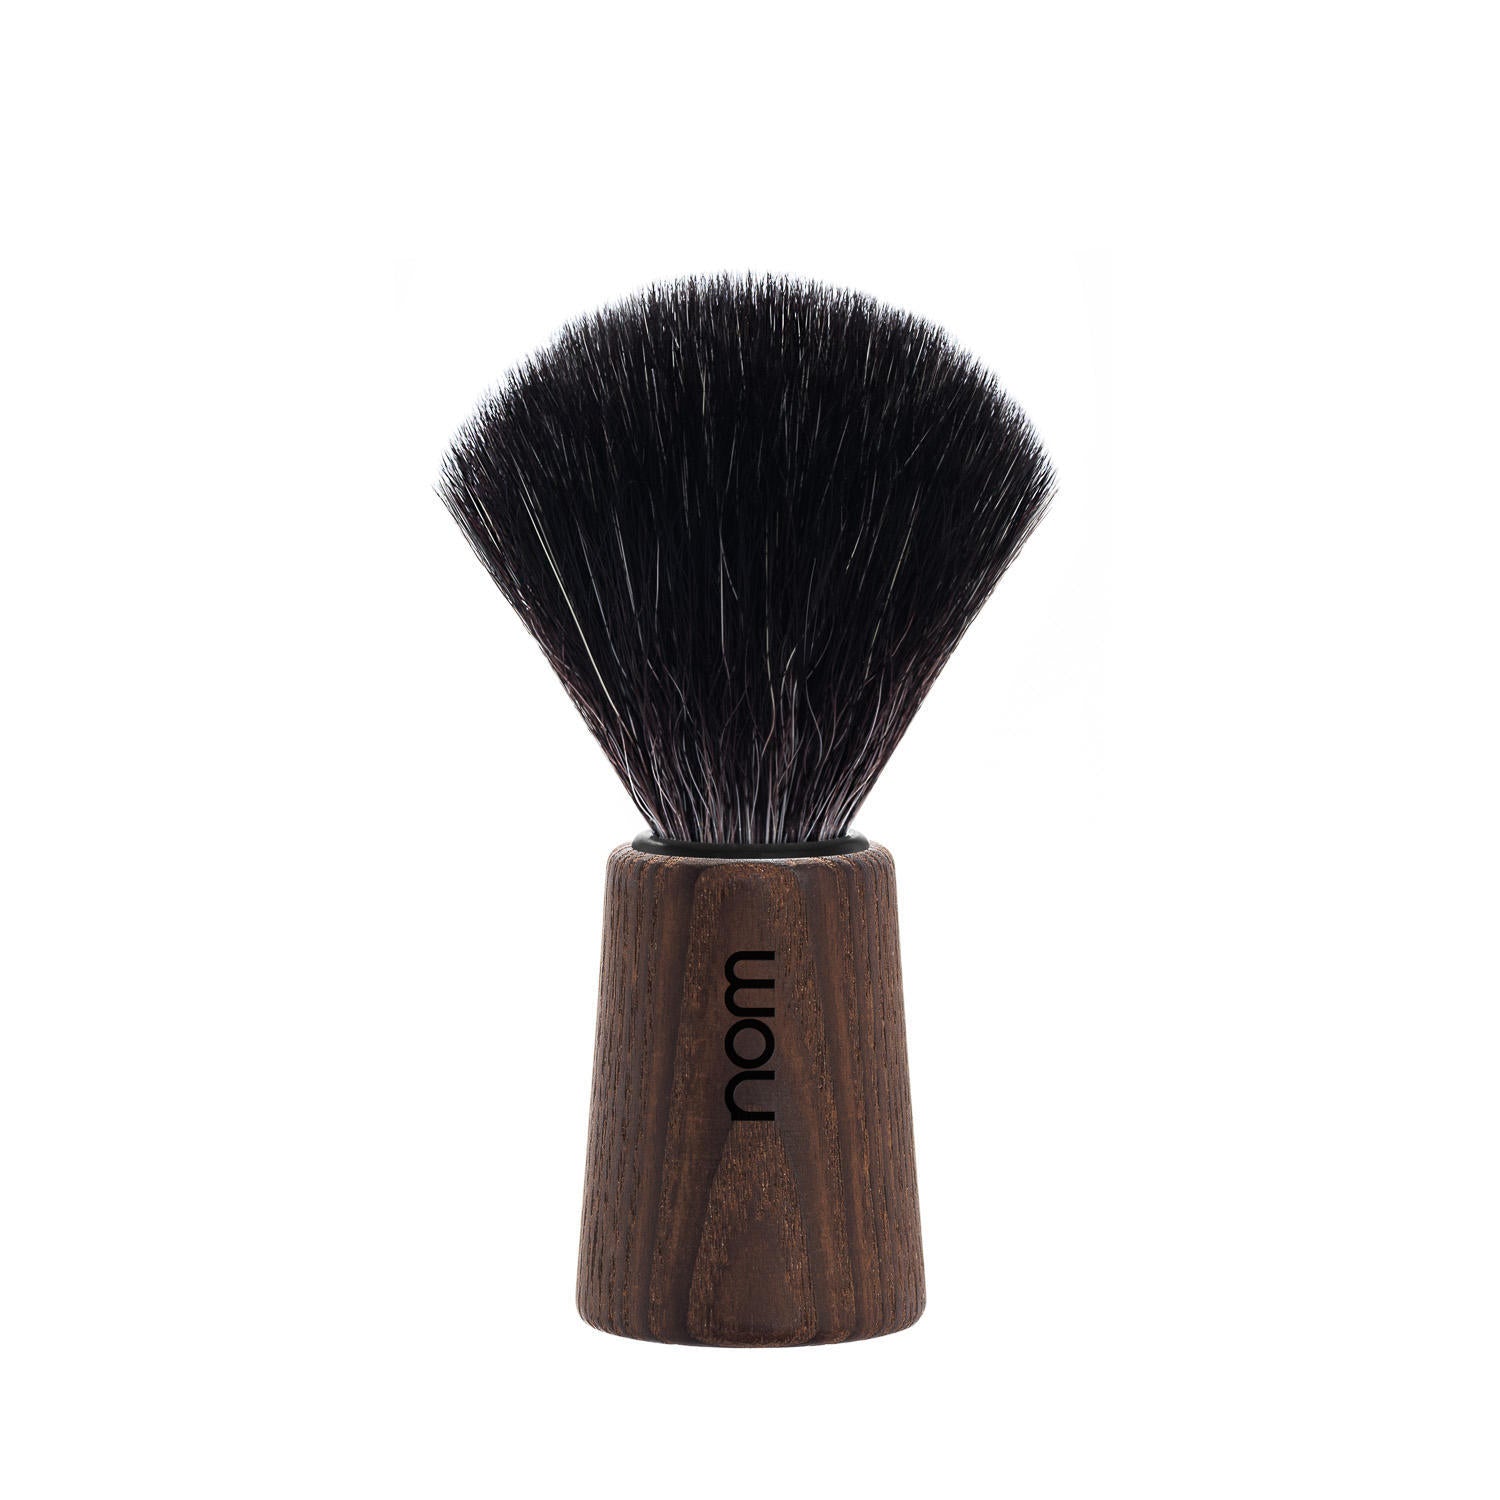 nom THEO Vegan Fibre Shaving Brush in Dark Ash